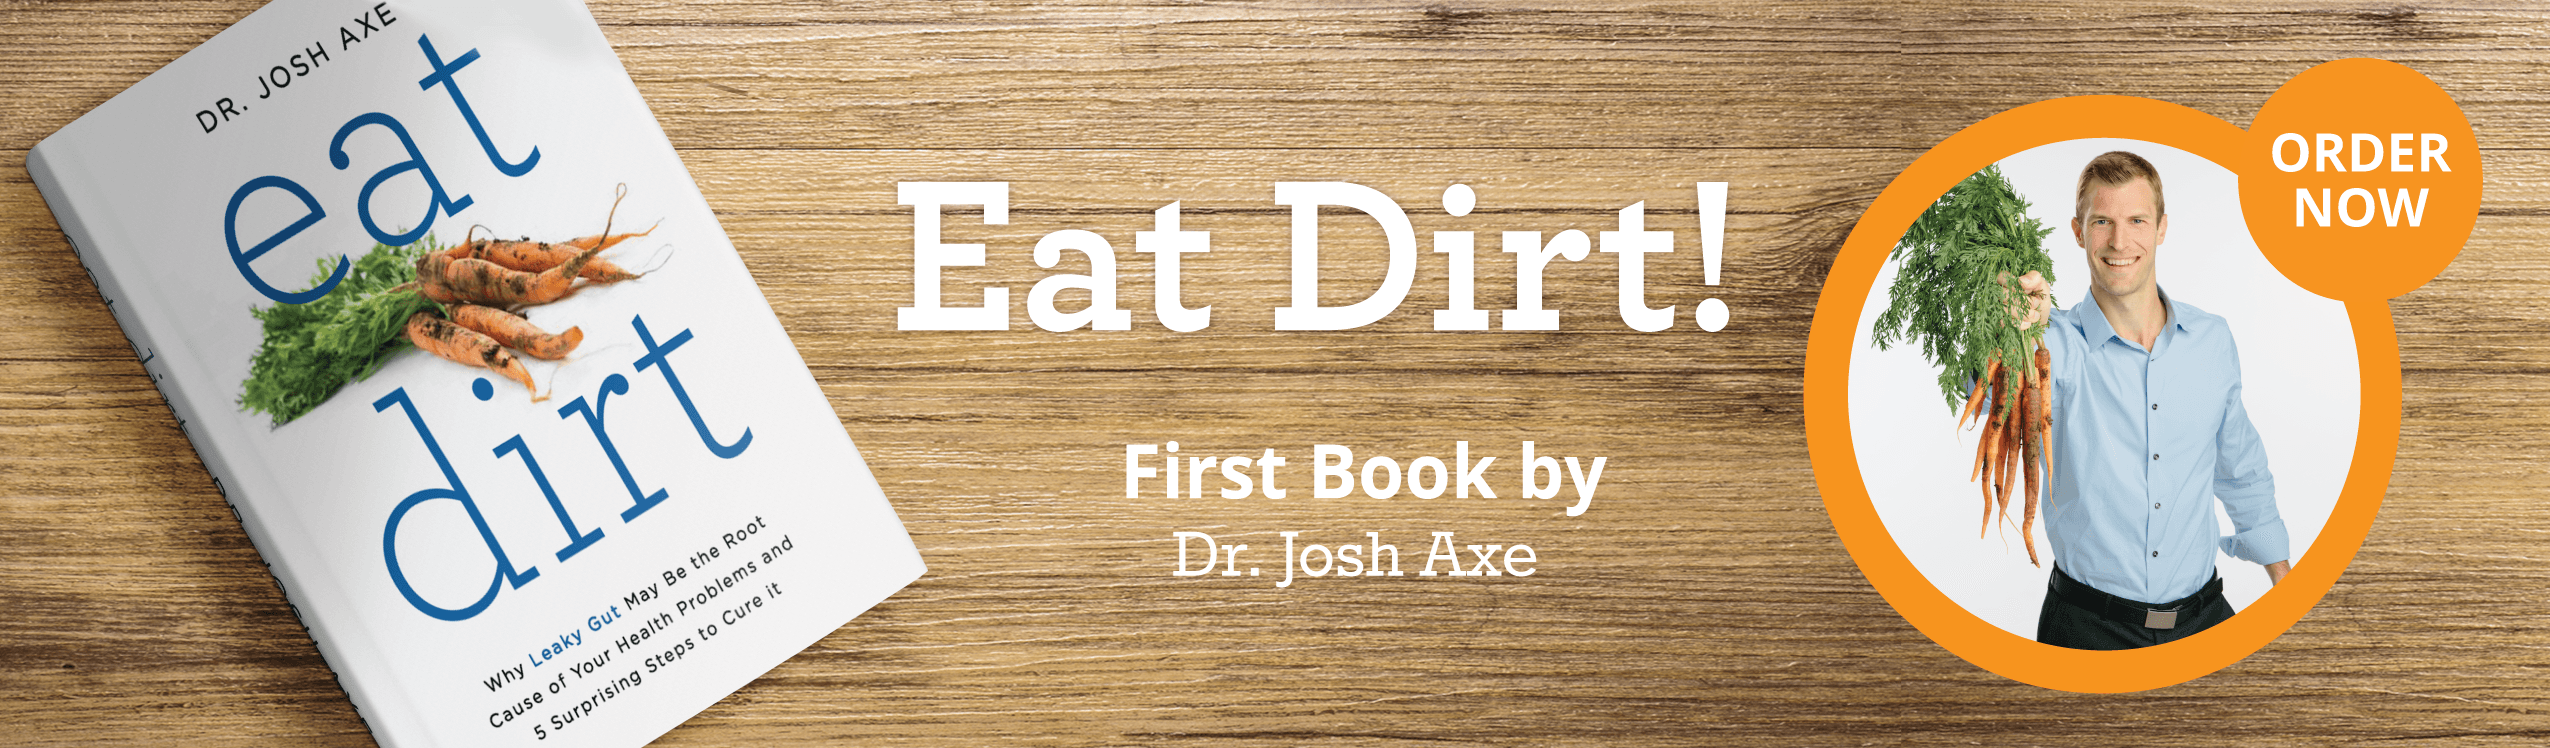 Eat dirt to fix eczema 